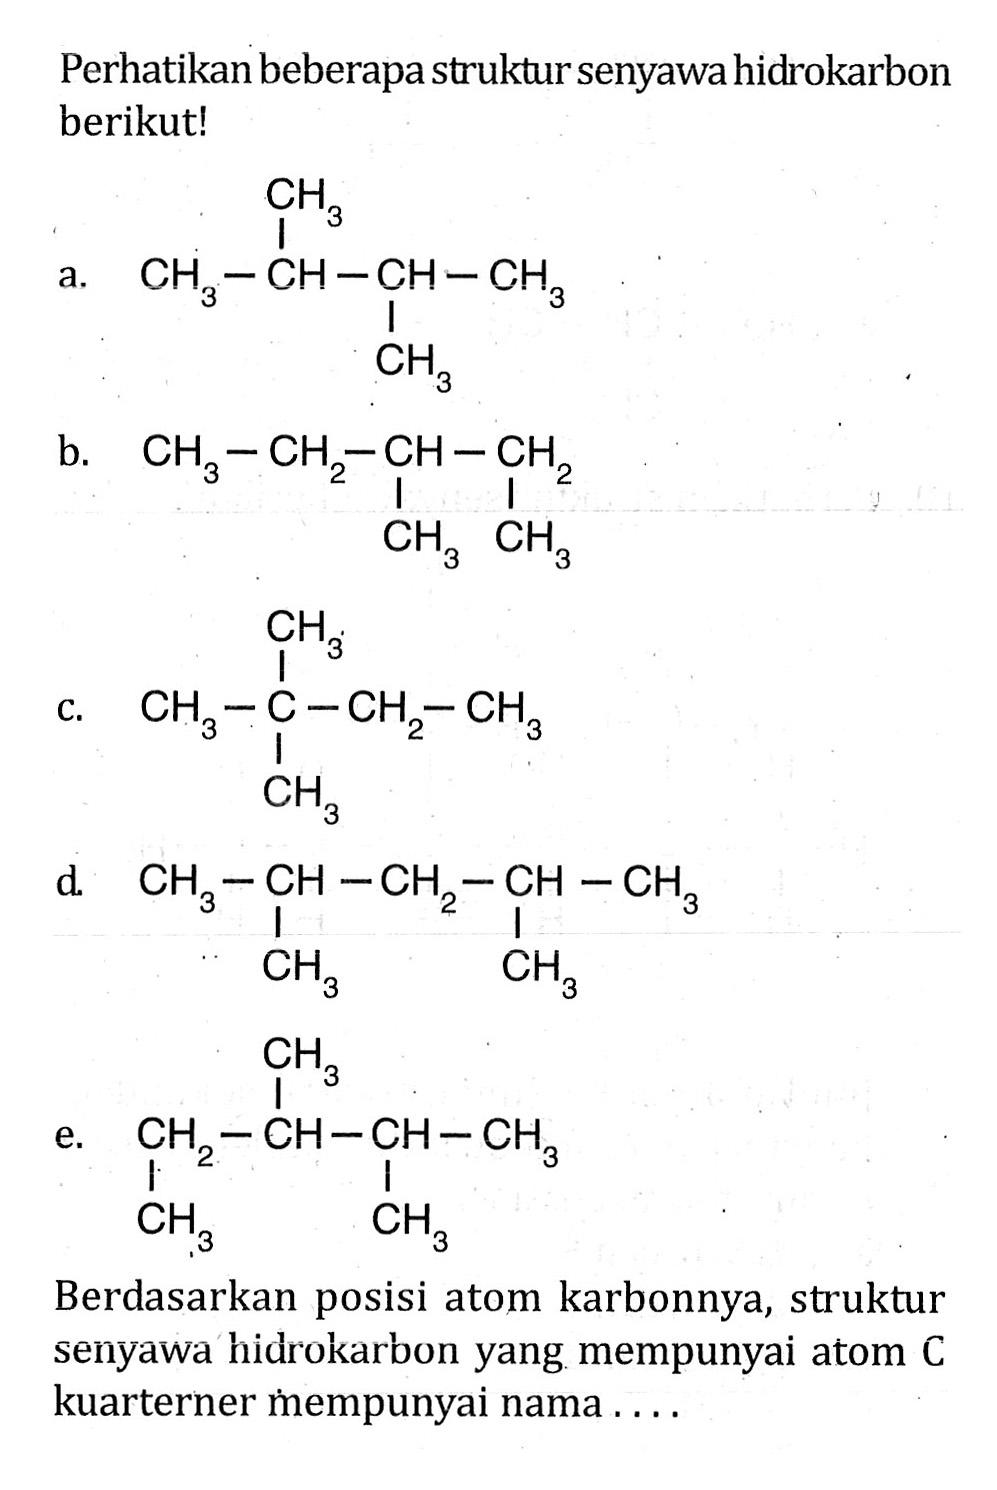 Perhatikan beberapa struktur senyawa hidrokarbon berikut! a. CH3 CH3 - CH - CH - CH3 CH3 b. CH3 - CH2 - CH2 - CH3 CH3 CH3 c. CH3 CH3 - C - CH2 - CH3 CH3 d. CH3 - CH - CH2 - CH - CH3 CH3 CH3 e. CH3 CH2 - CH - CH - CH3 CH3 CH3 Berdasarkan posisi atom karbonnya, struktur senyawa hidrokarbon yang mempunyai atom C kuarterner mempunyai nama . . . .